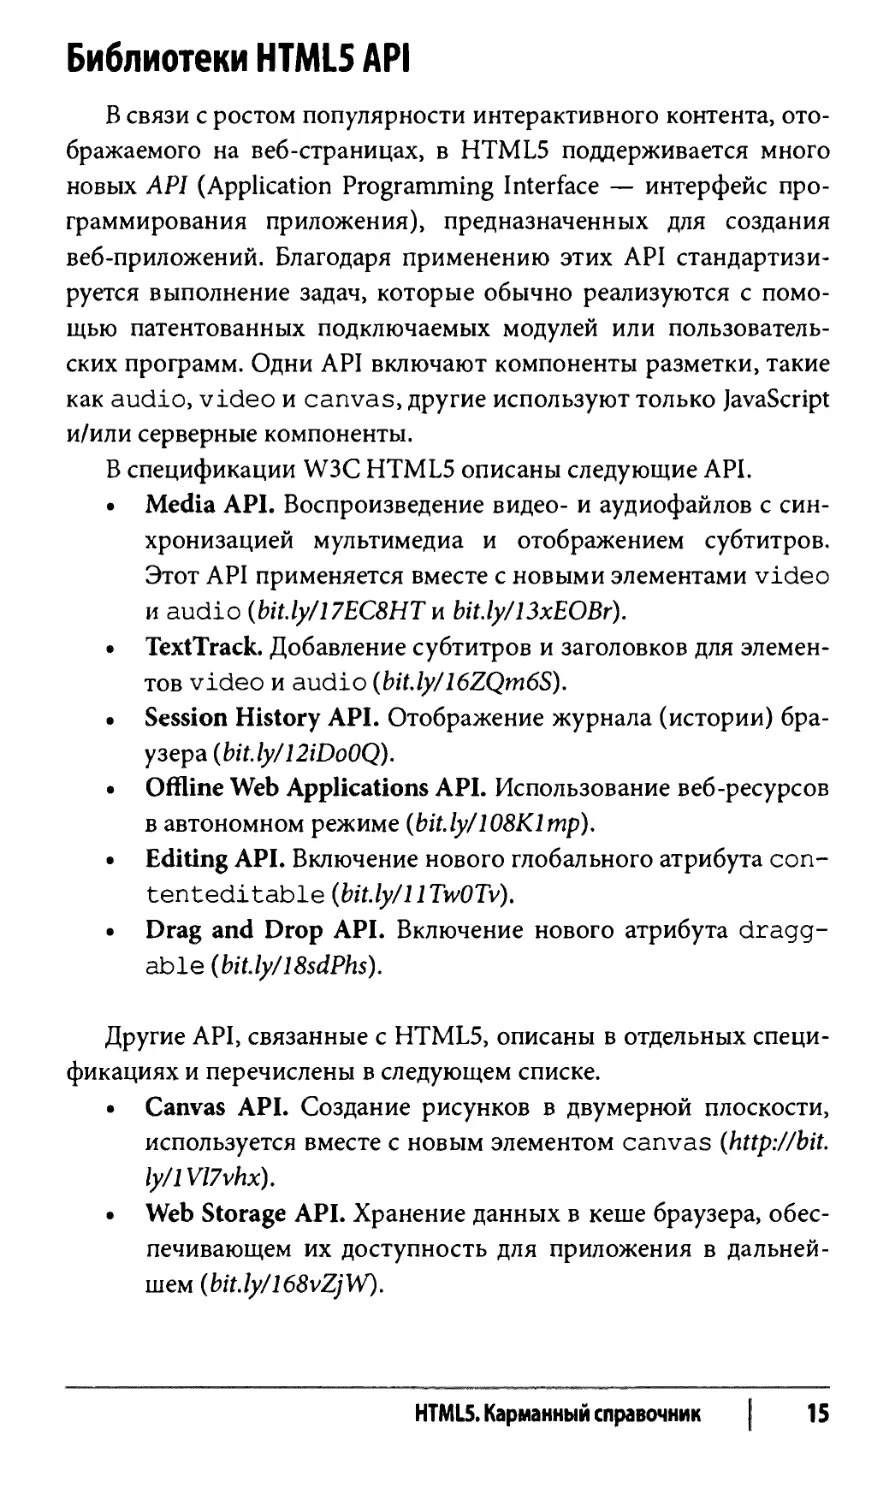 Библиотеки HTML5 API